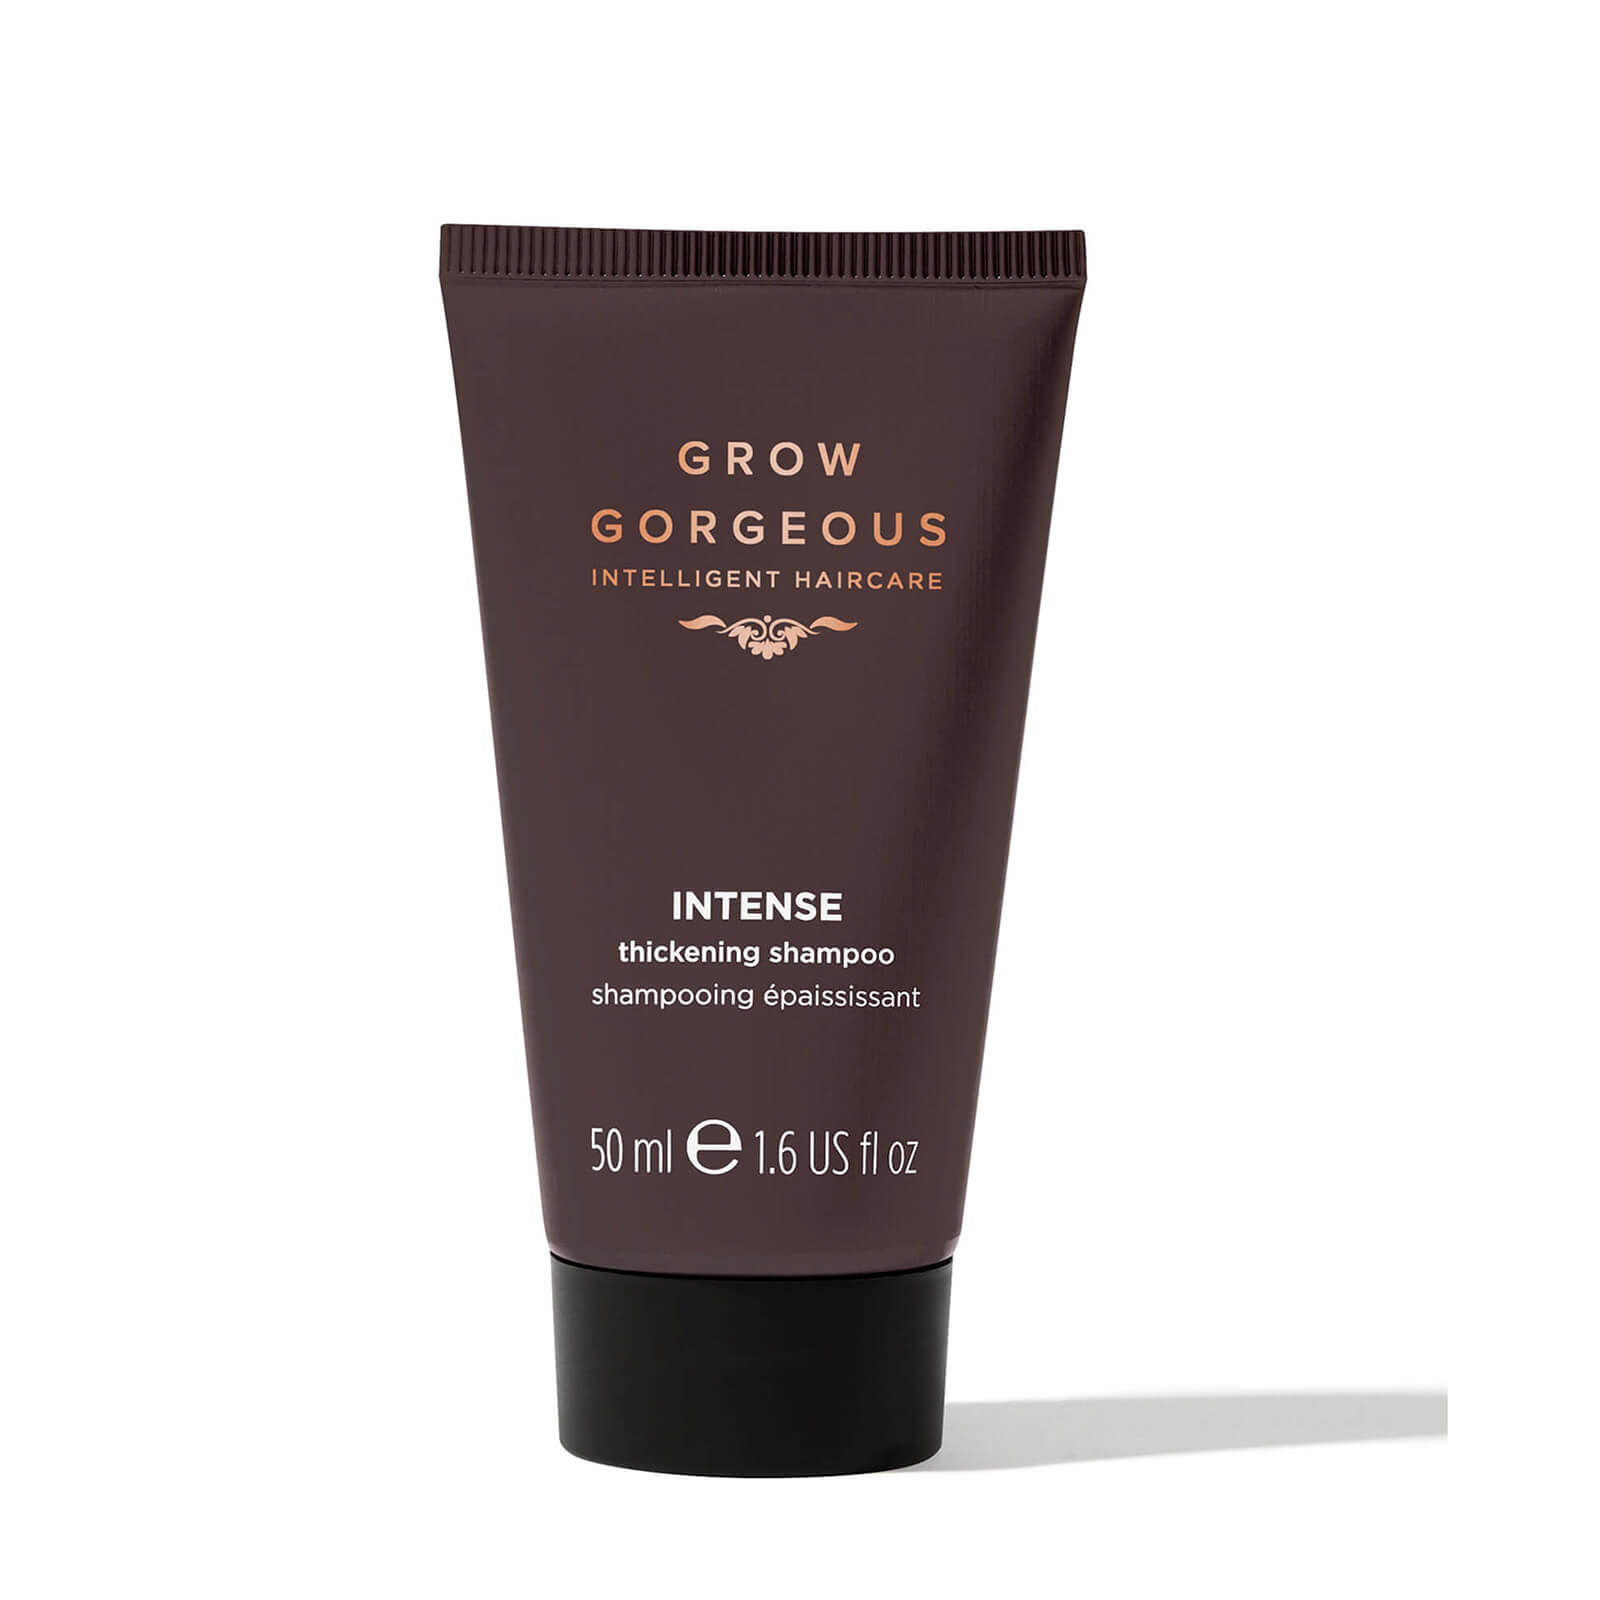 Grow Gorgeous Intense Thickening Shampoo Mini 50ml In Brown